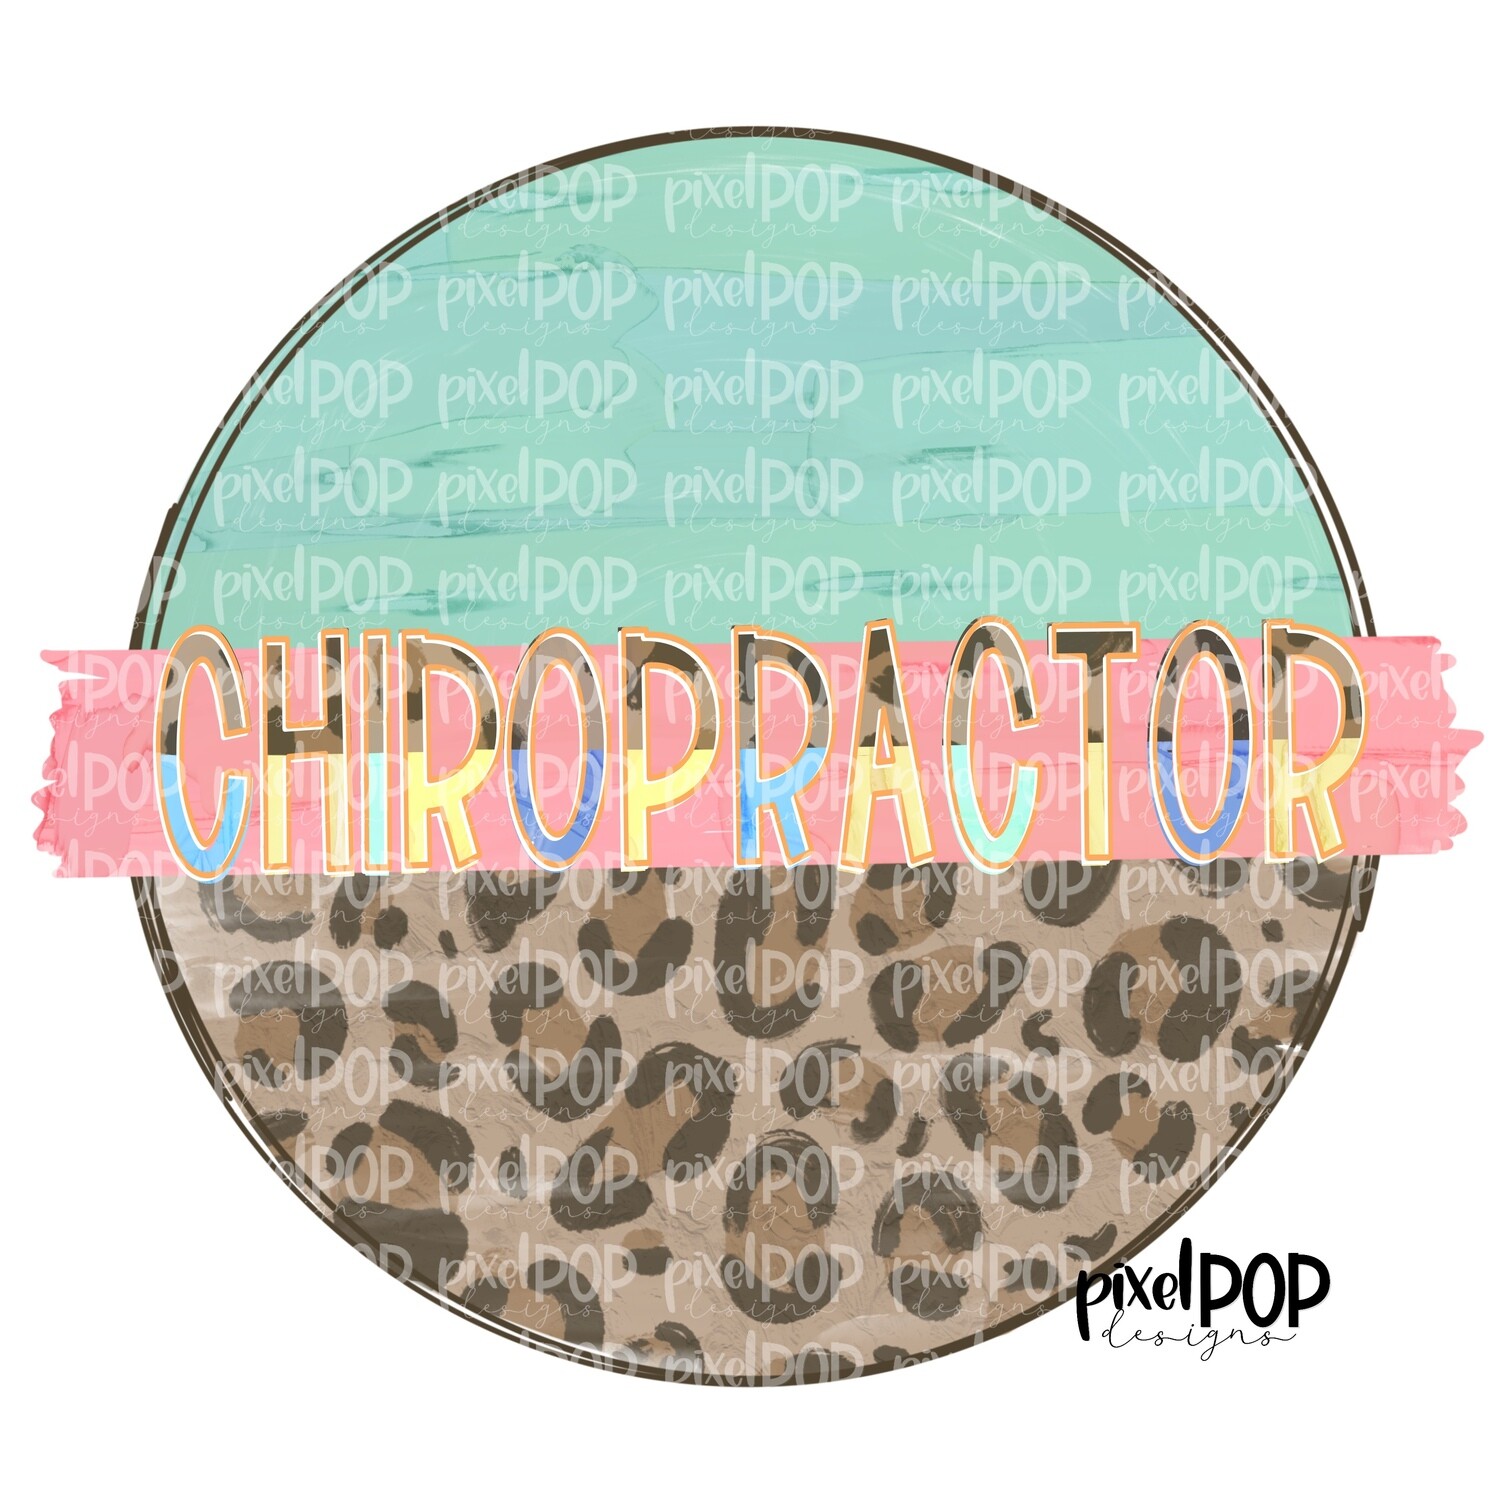 Chiropractor Leopard and Mint PNG | Chiropractor Design | Chiropractor Digital | Hand Painted | Digital Download